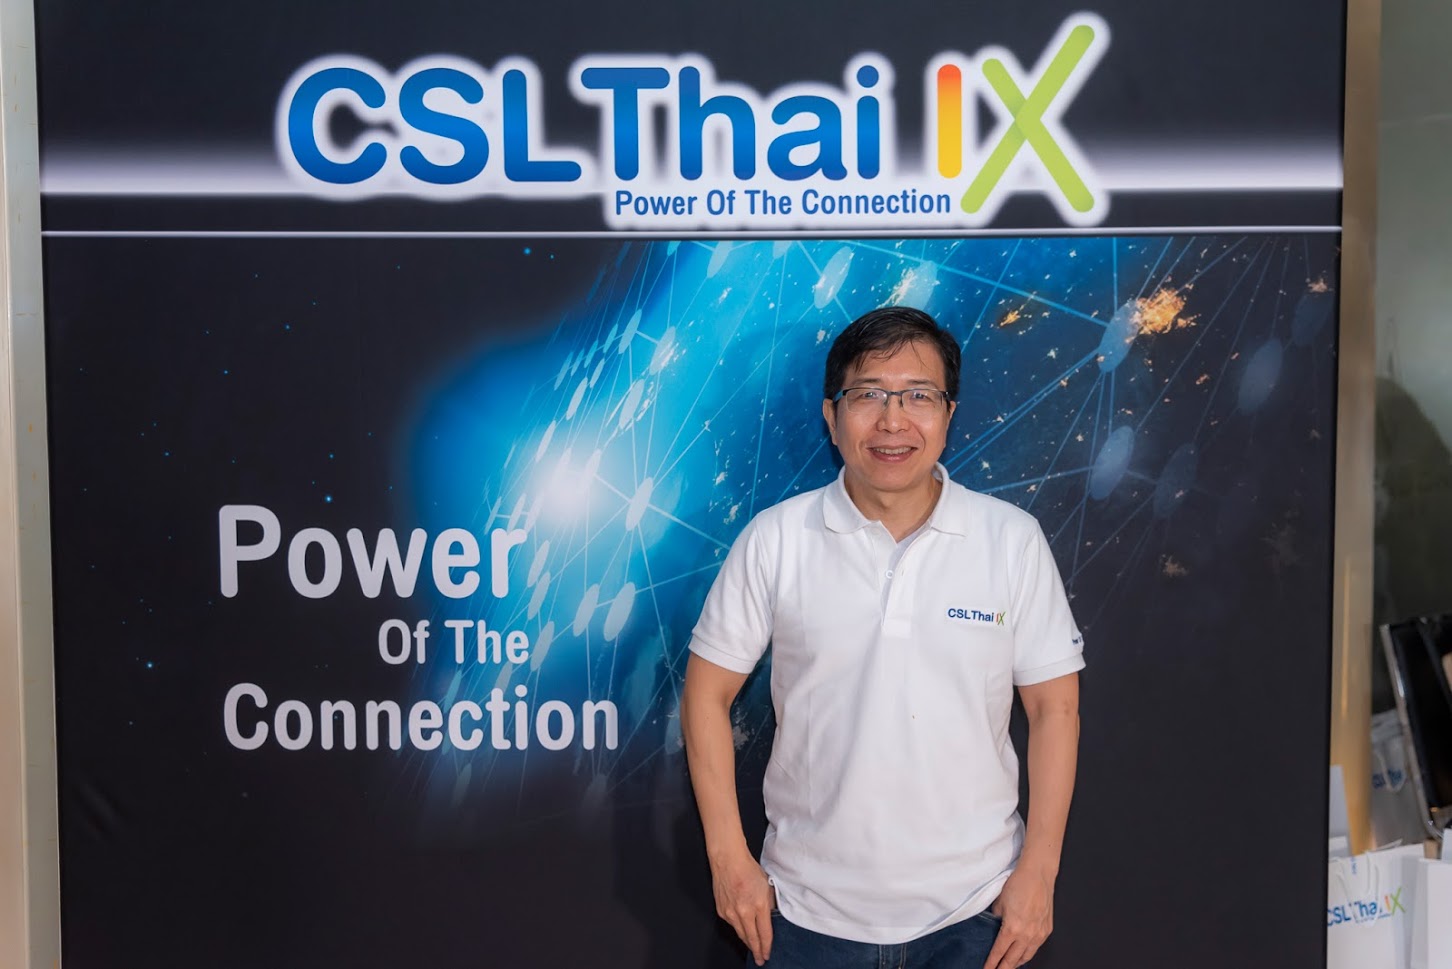 CSL Thai IX เผยยุคใหม่ของศูนย์กลางการแลกเปลี่ยนข้อมูลอินเตอร์เน็ต มั่นใจพร้อมให้บริการแล้ววันนี้!